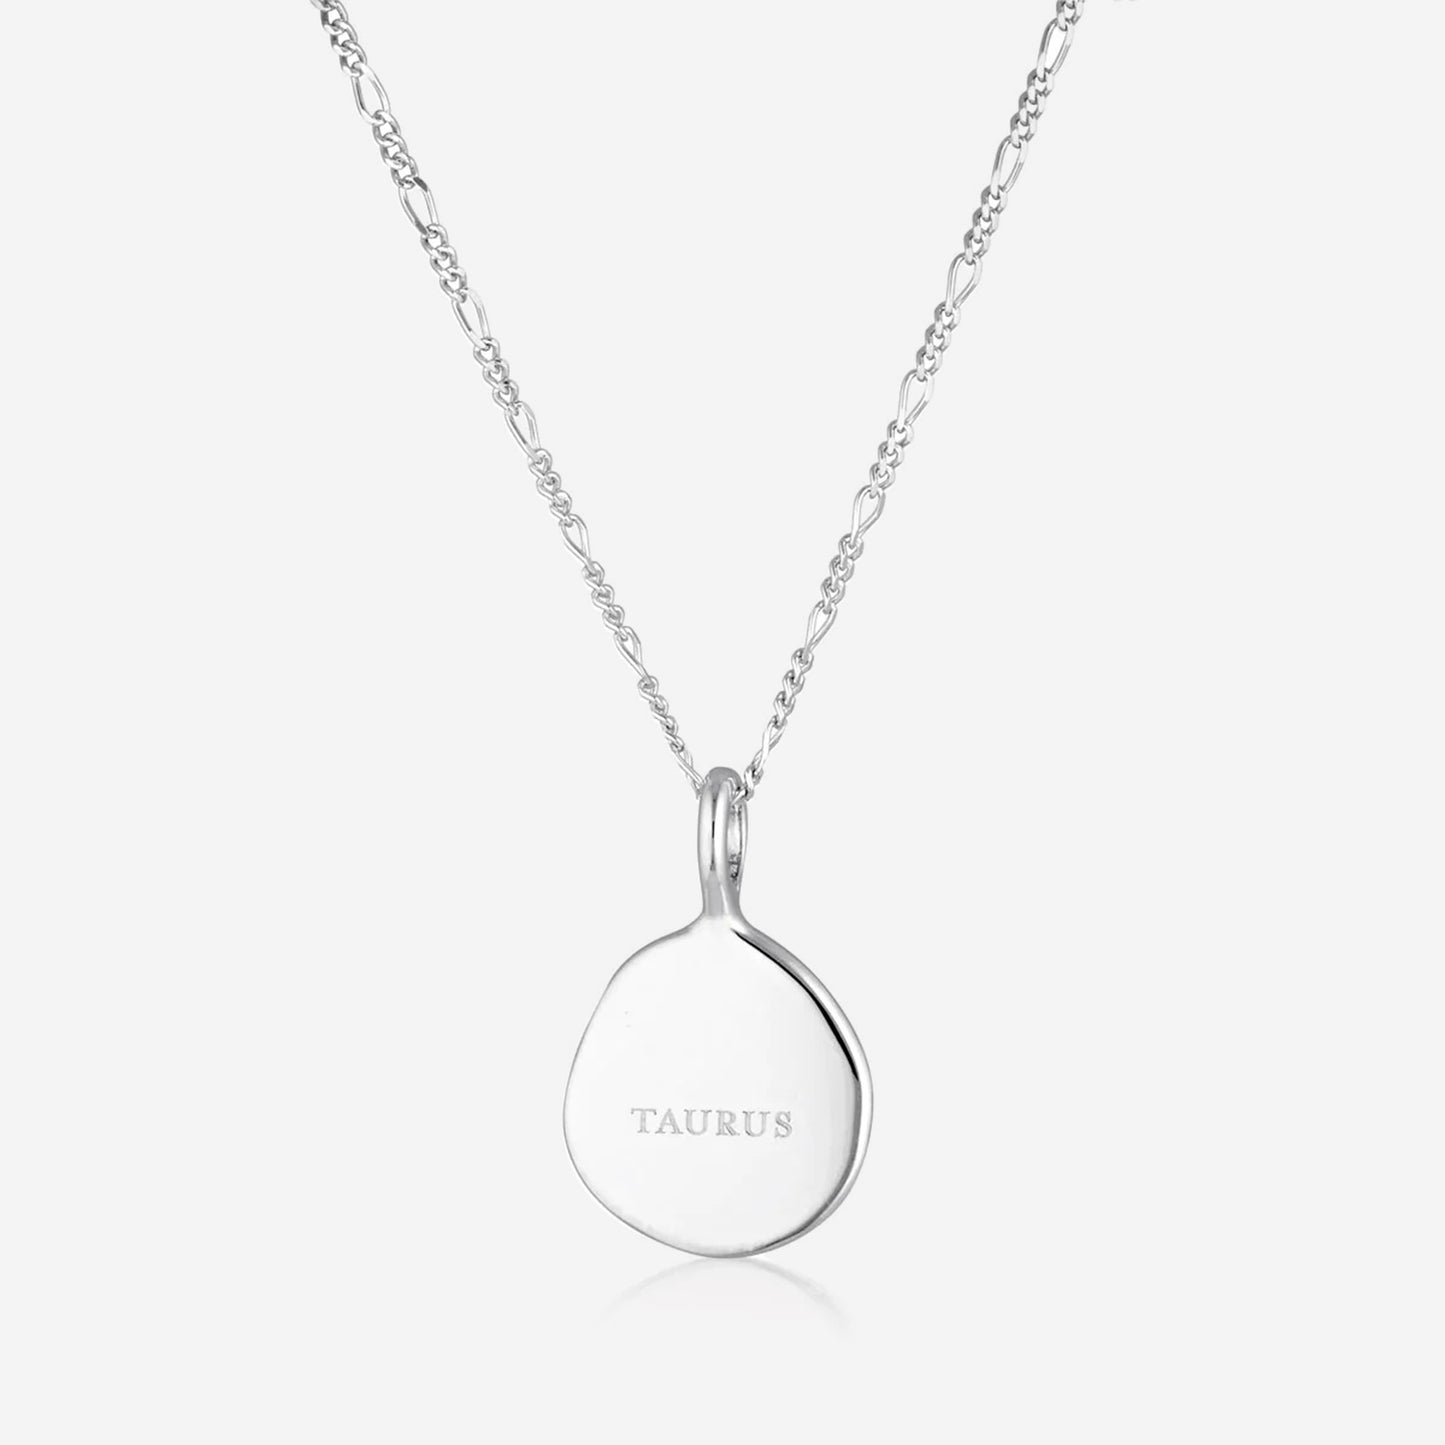 Linda Tahija - Zodiac Cable Necklace - Taurus - Sterling Silver